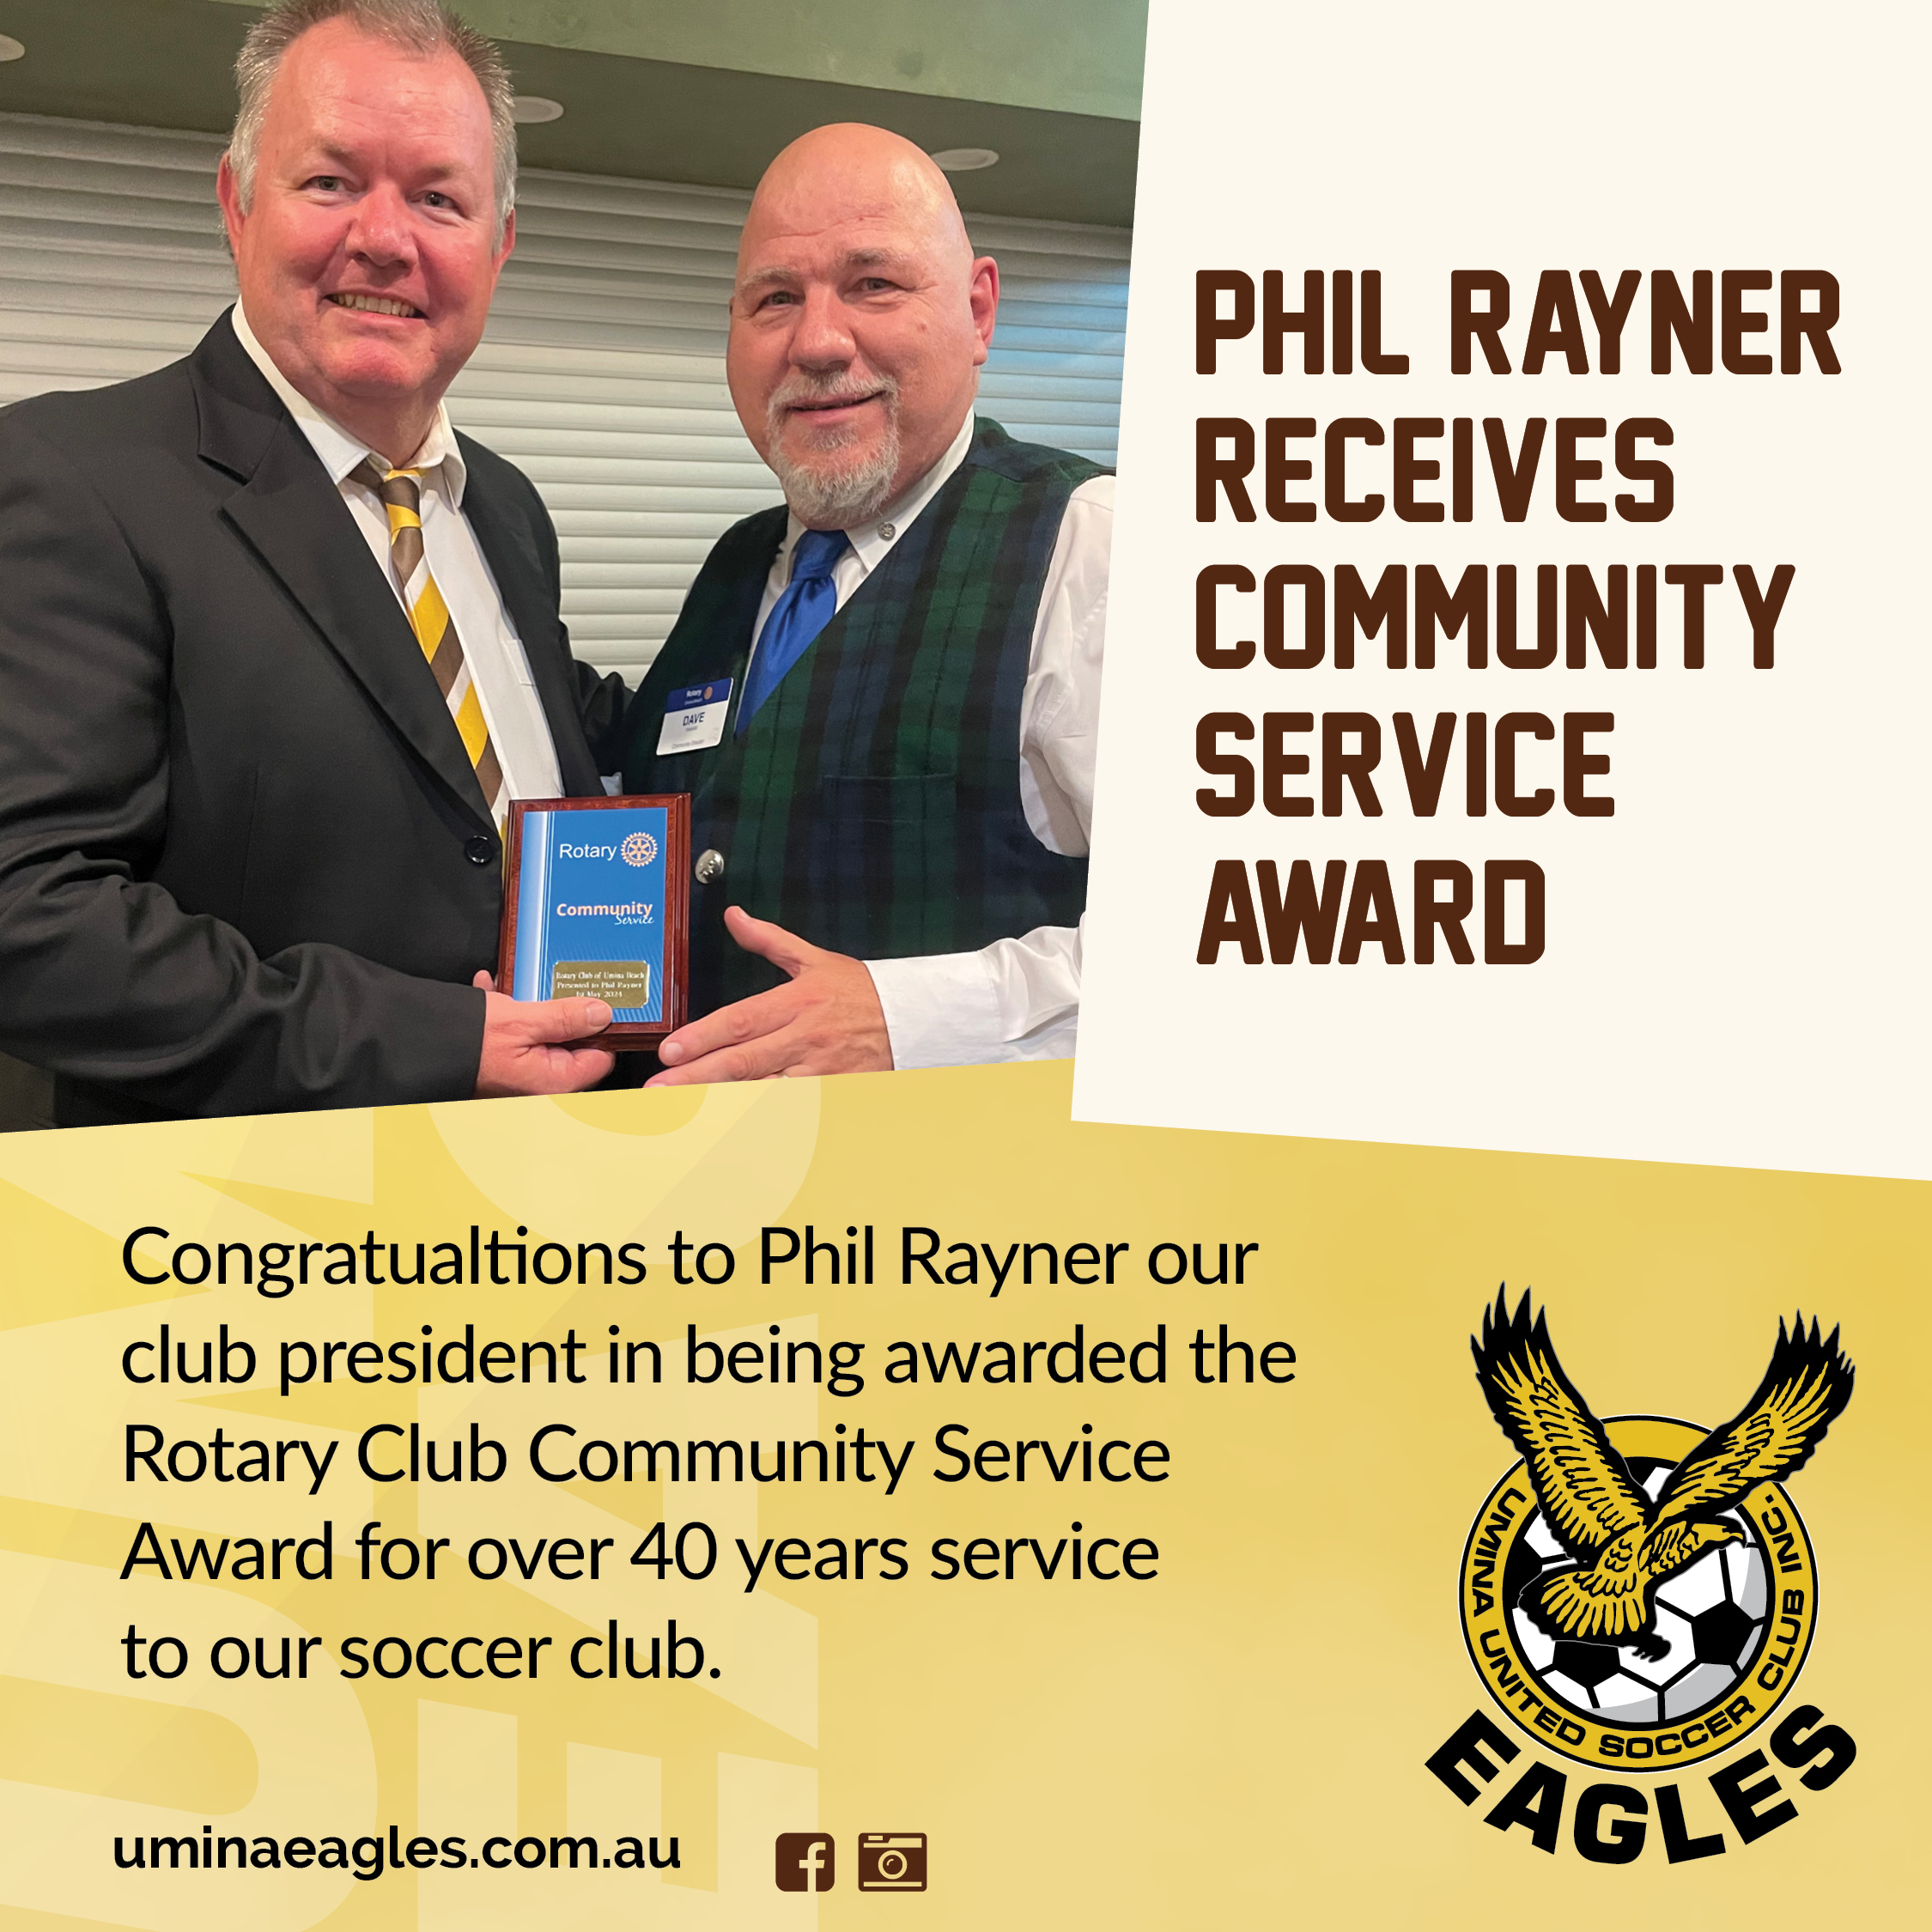 Phil Rayner community service award